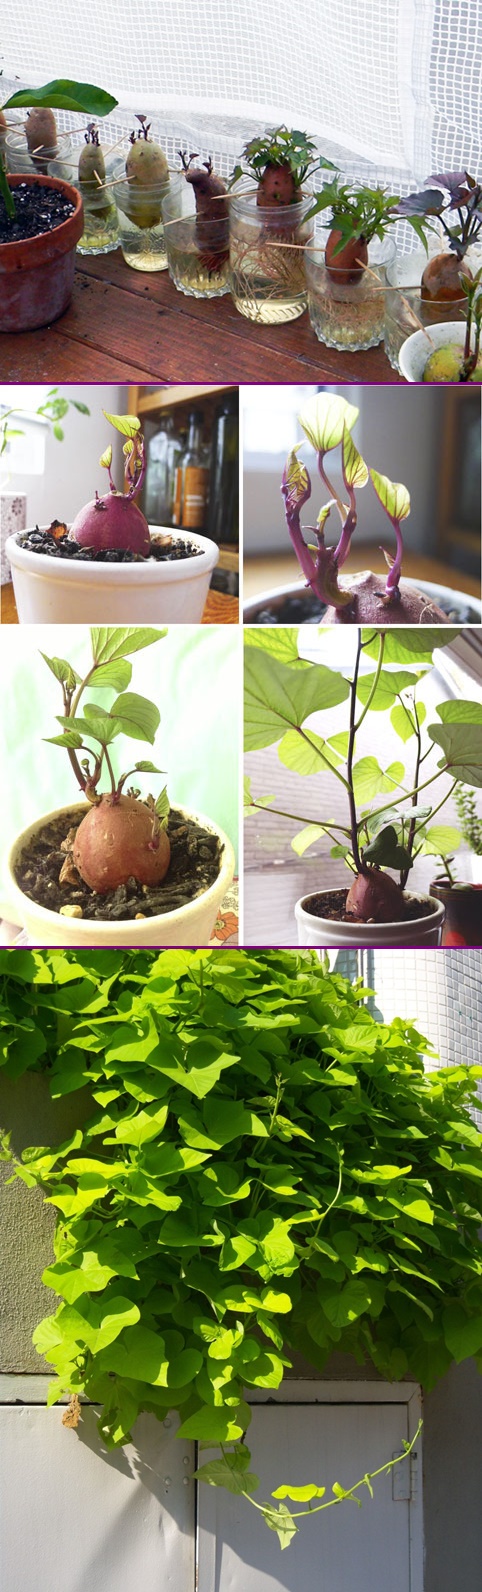 How to grow sweet potato vine plants 